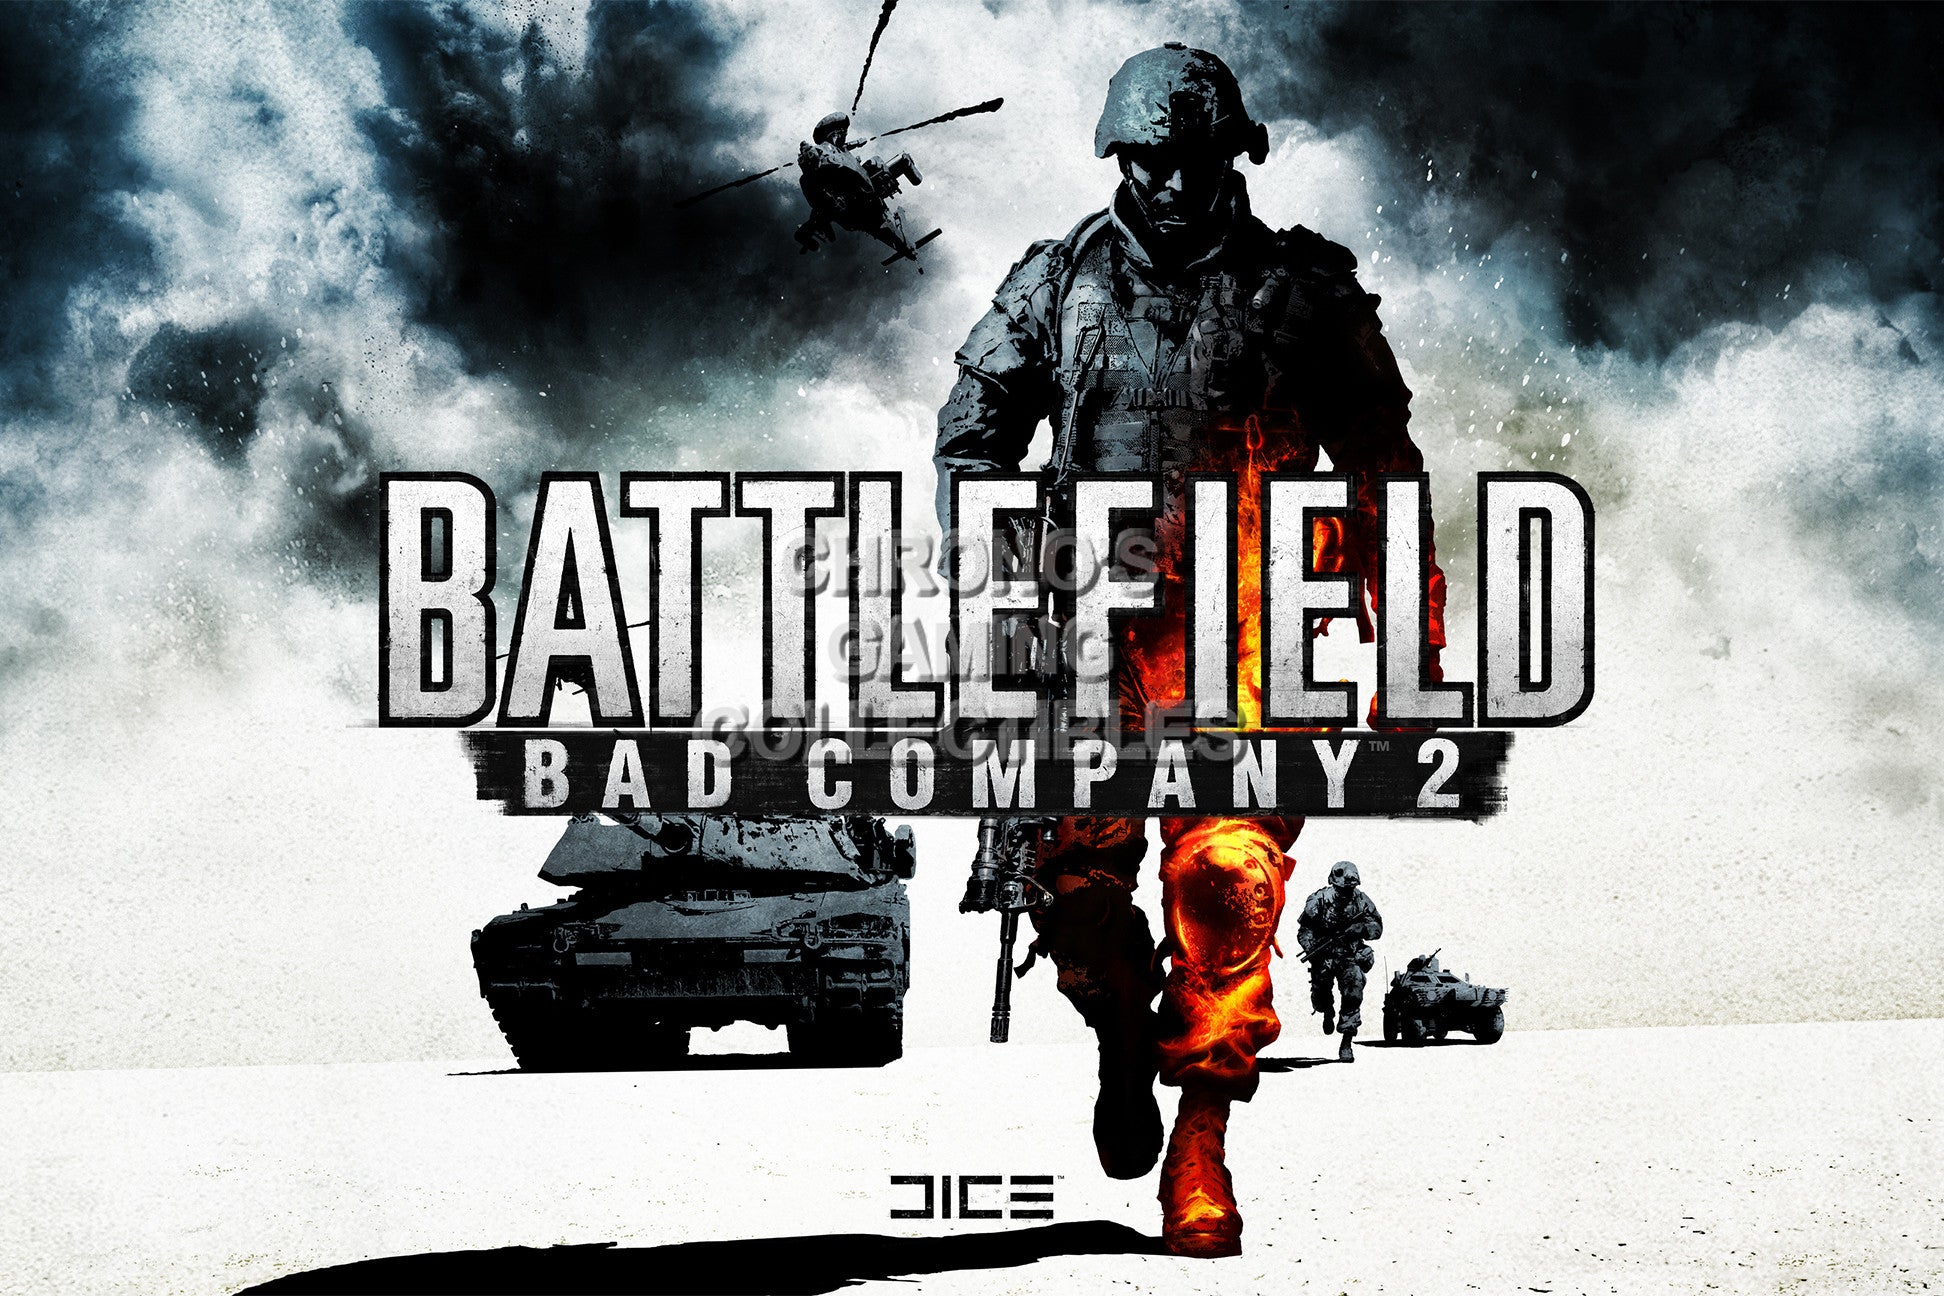 battlefield bad company 2 xbox 360